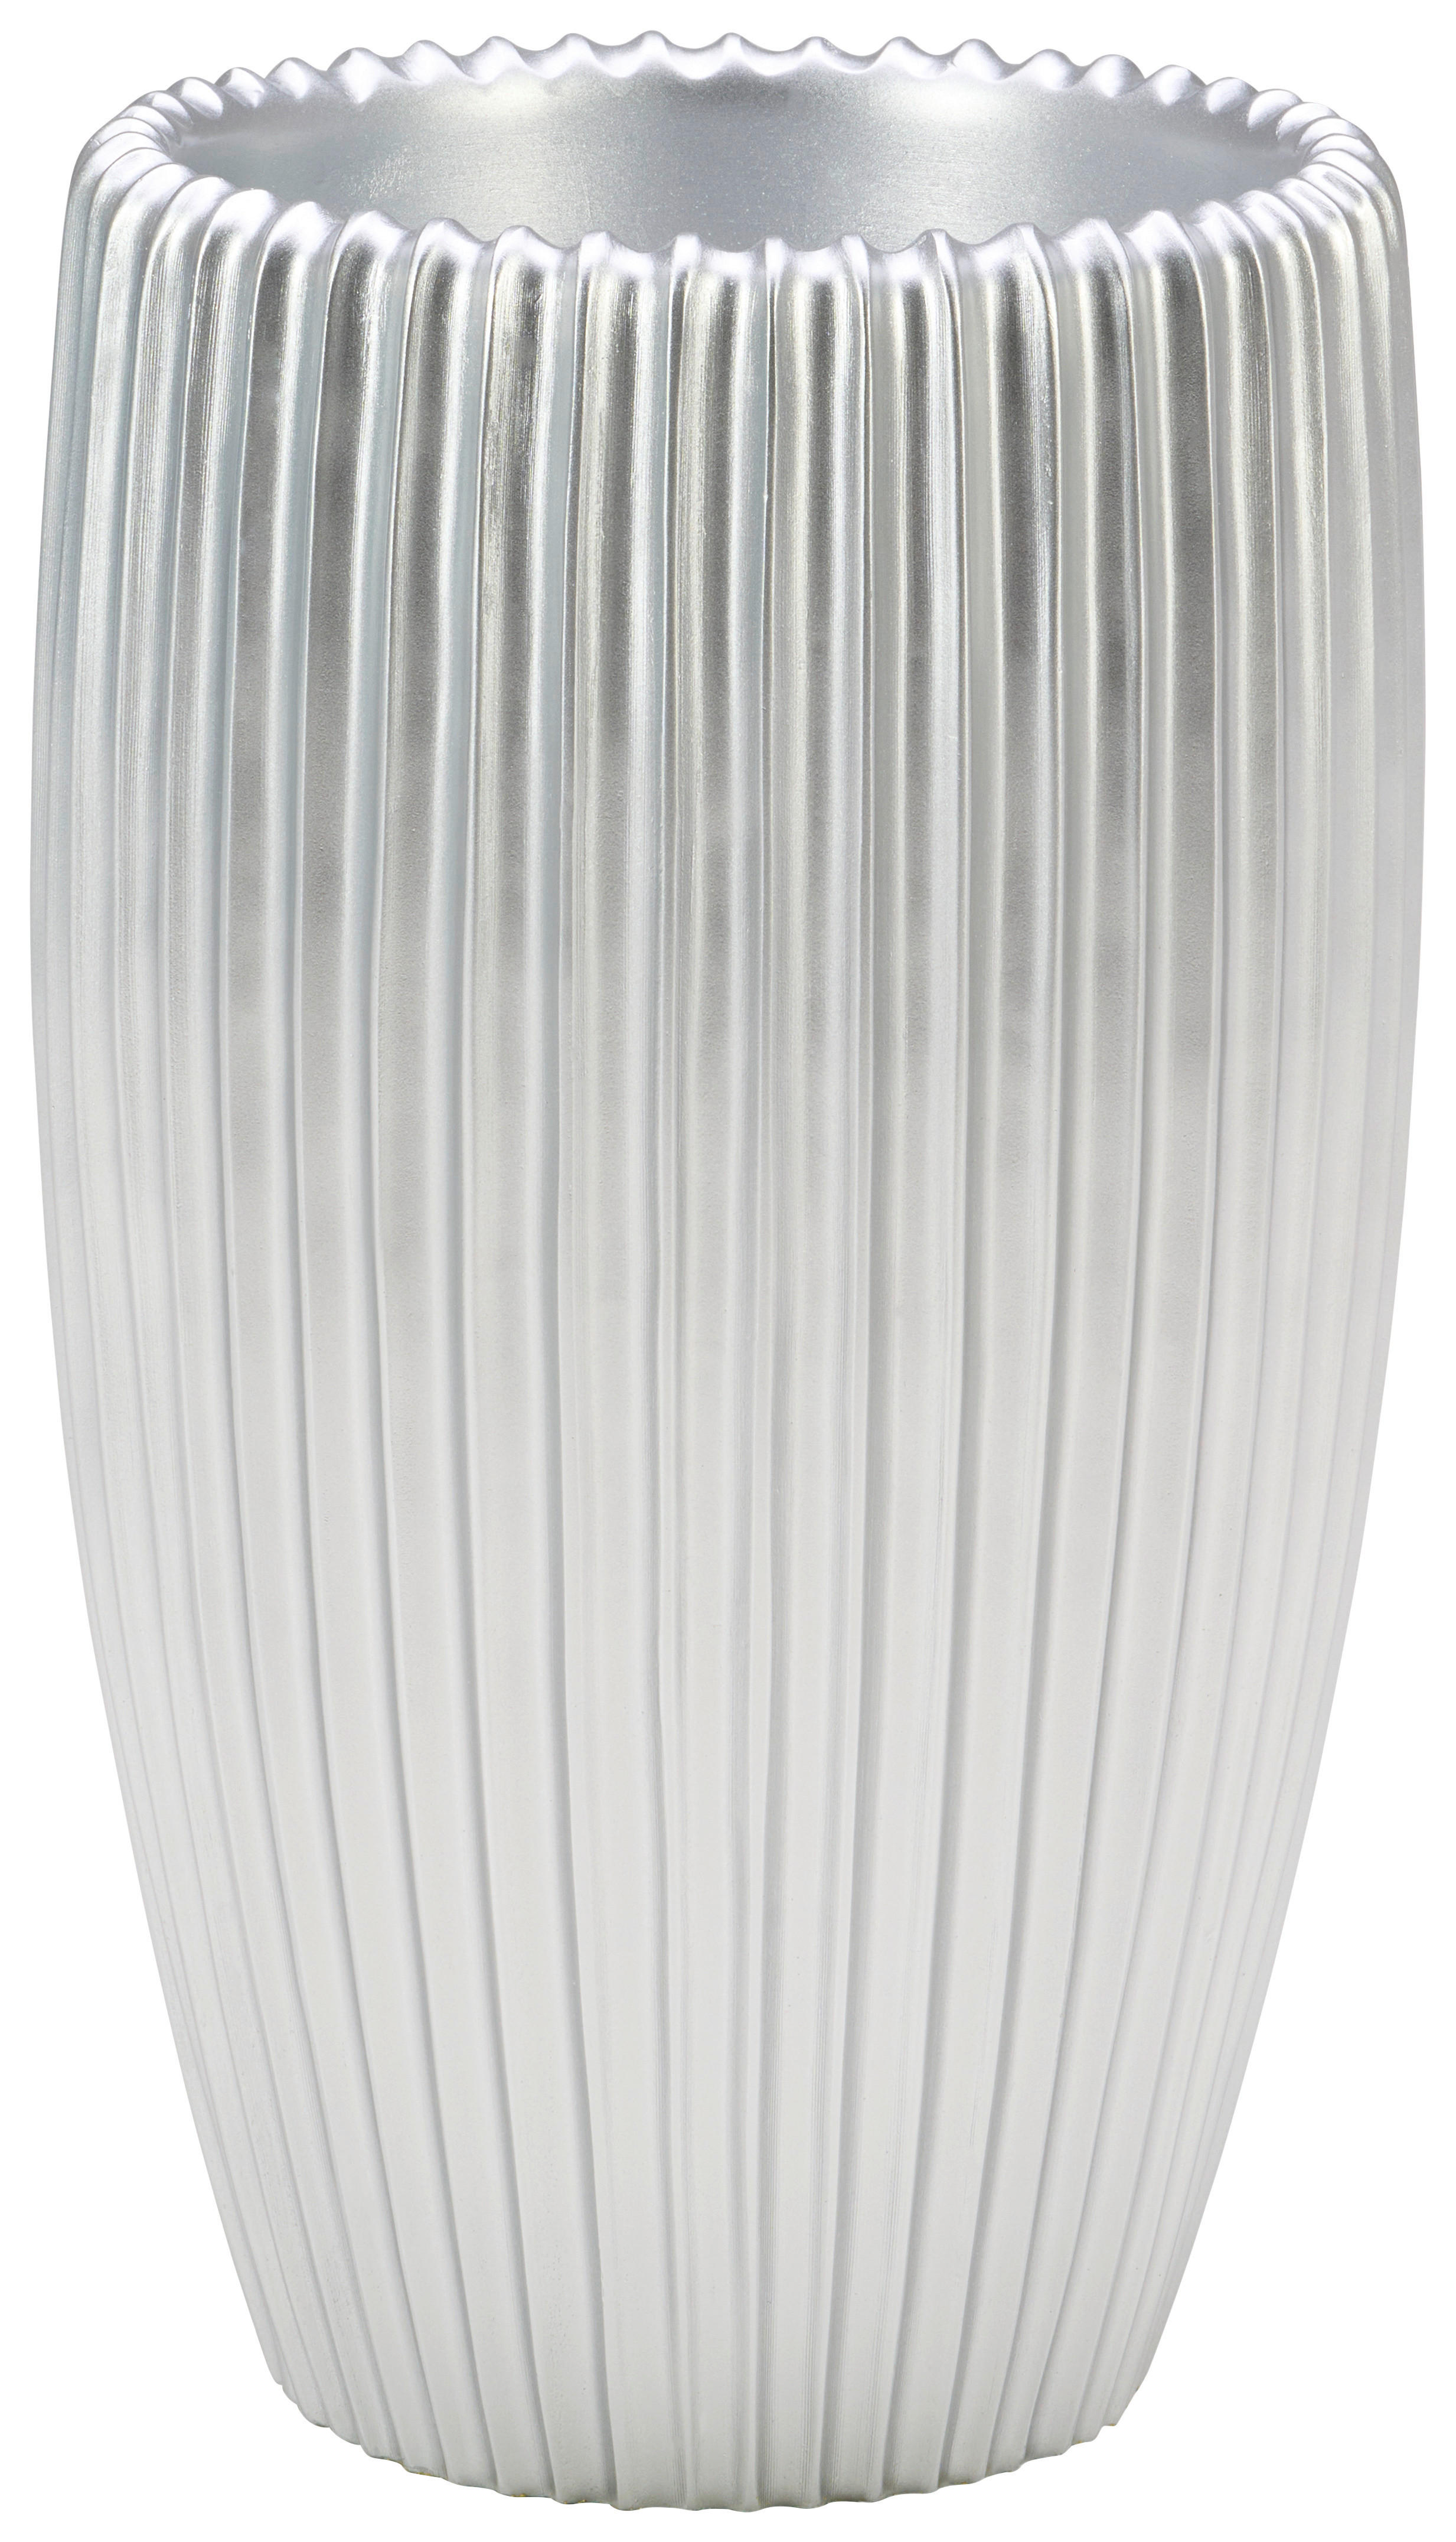 Ambia Home VÁZA, plast, 50 cm - barvy stříbra